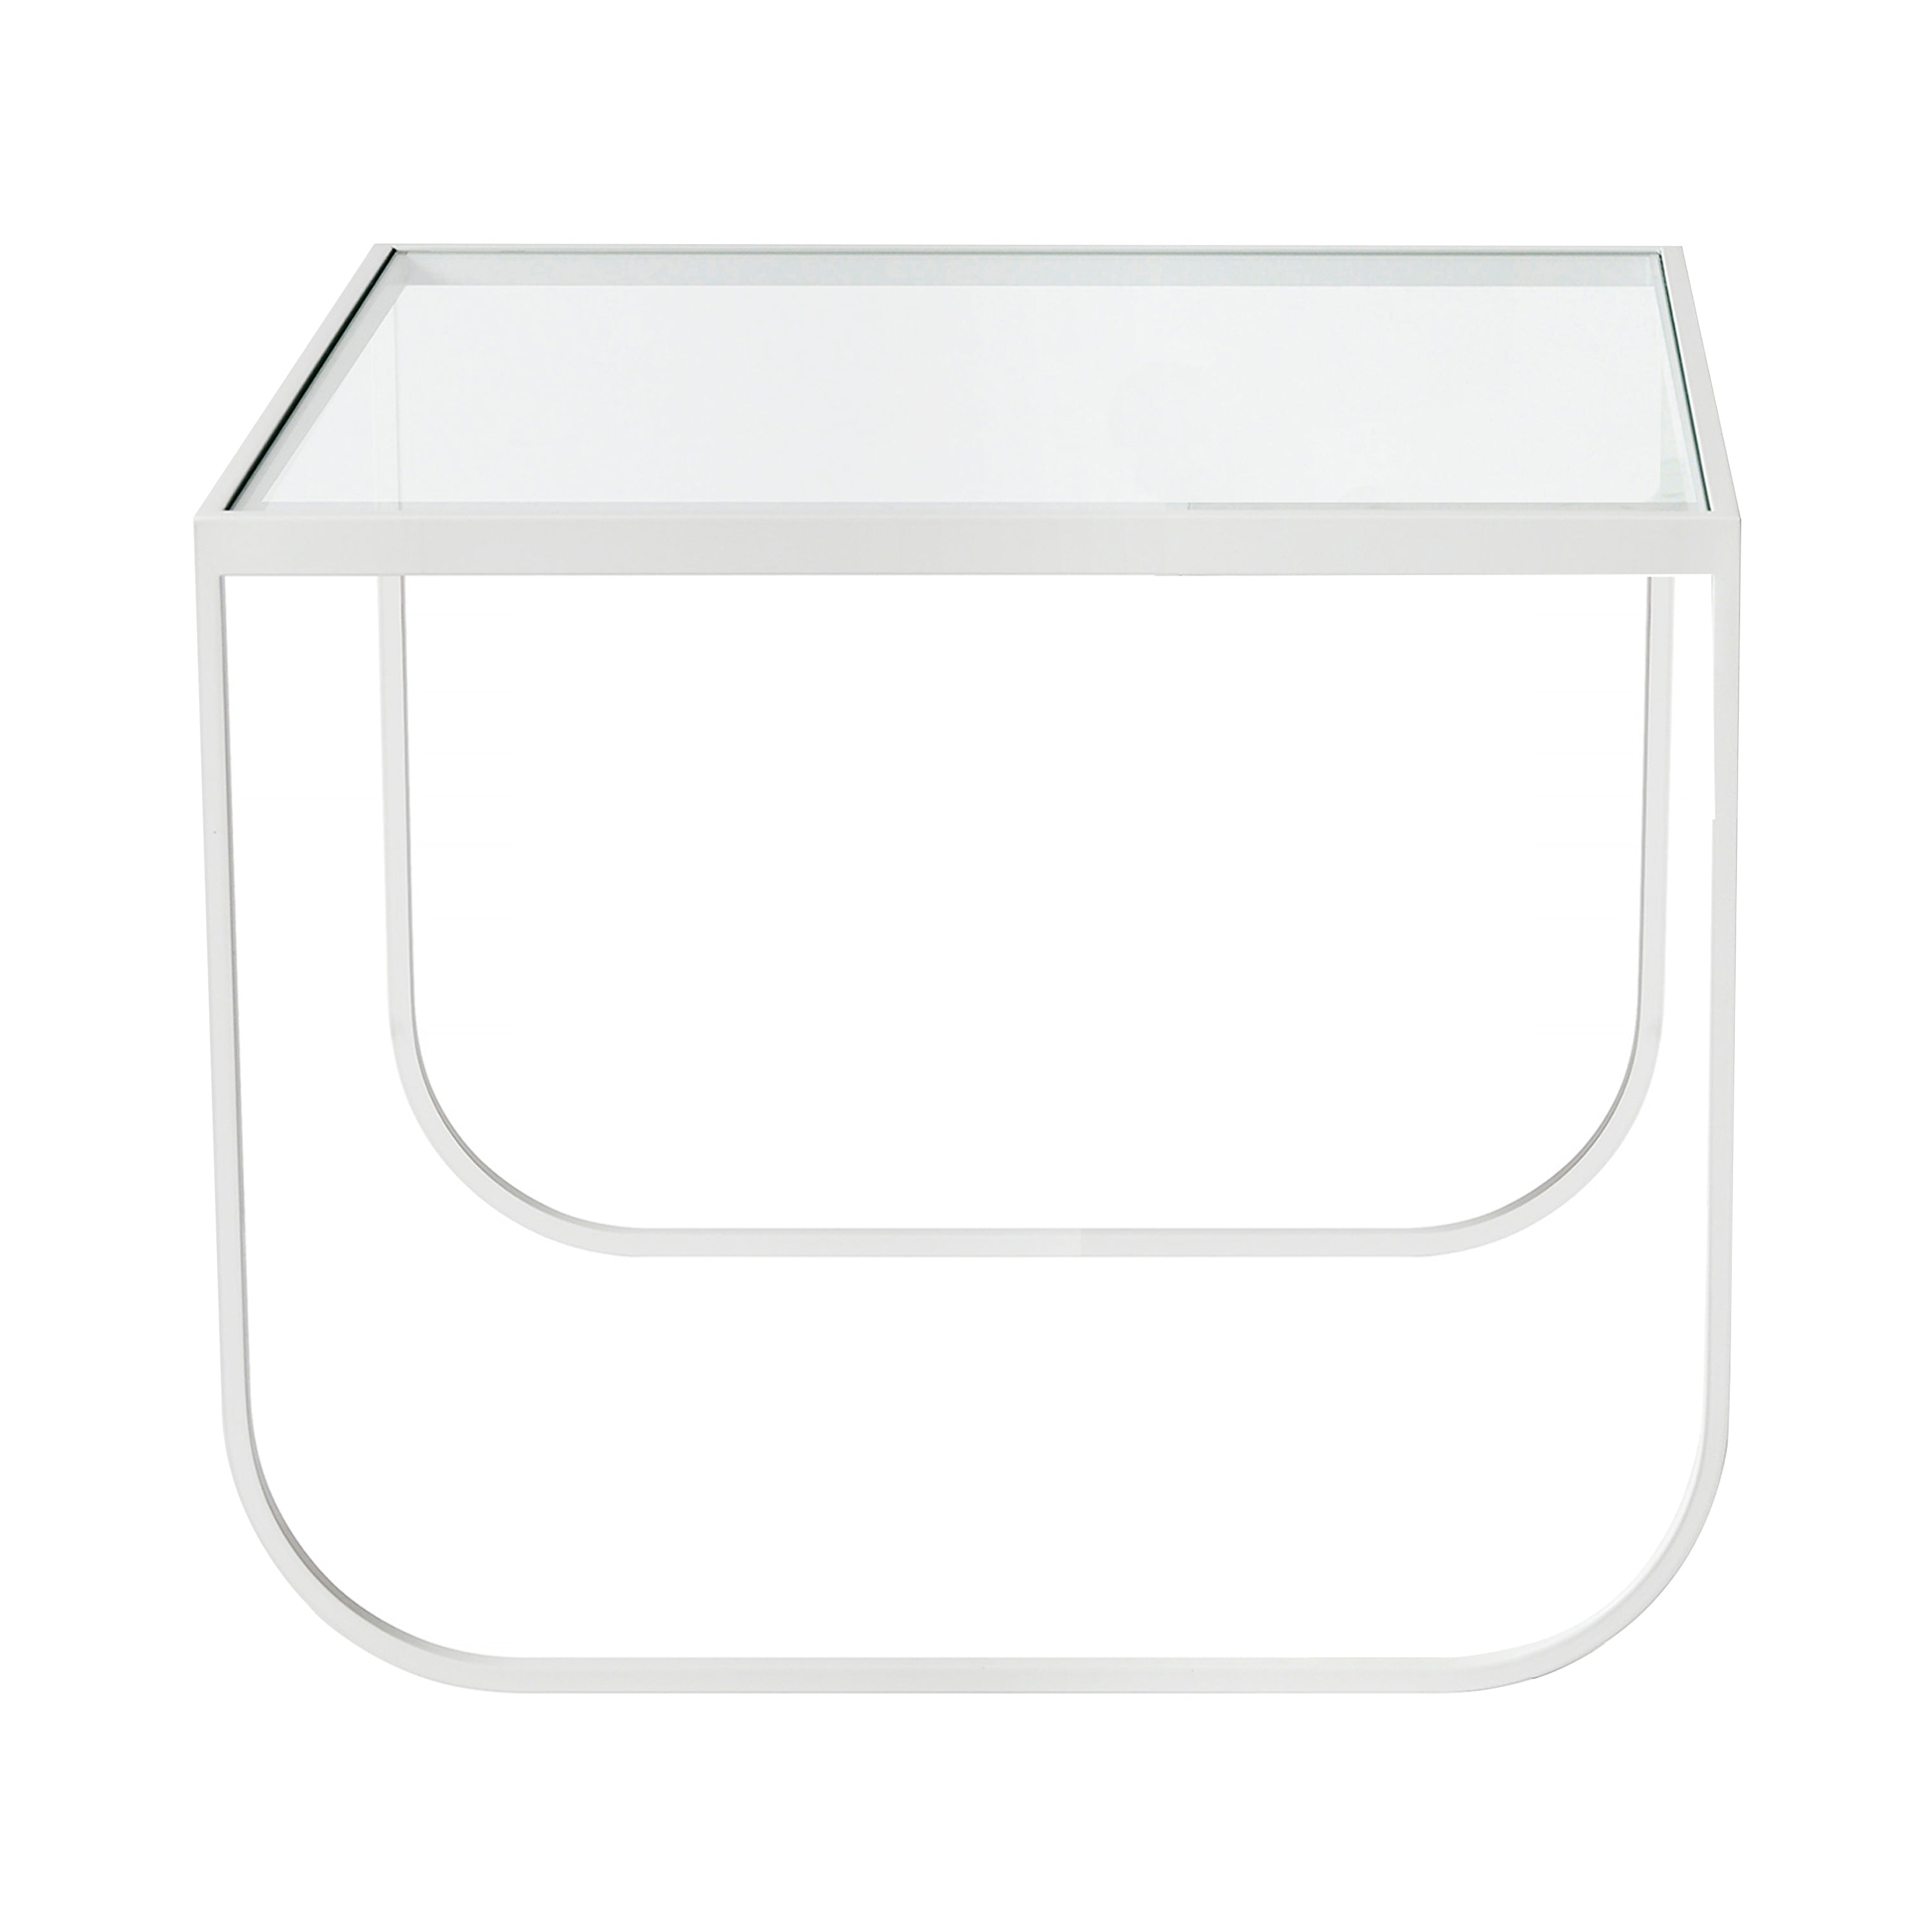 Tati Coffee Table: Square + Glass Top + High + Transparent Glass + White